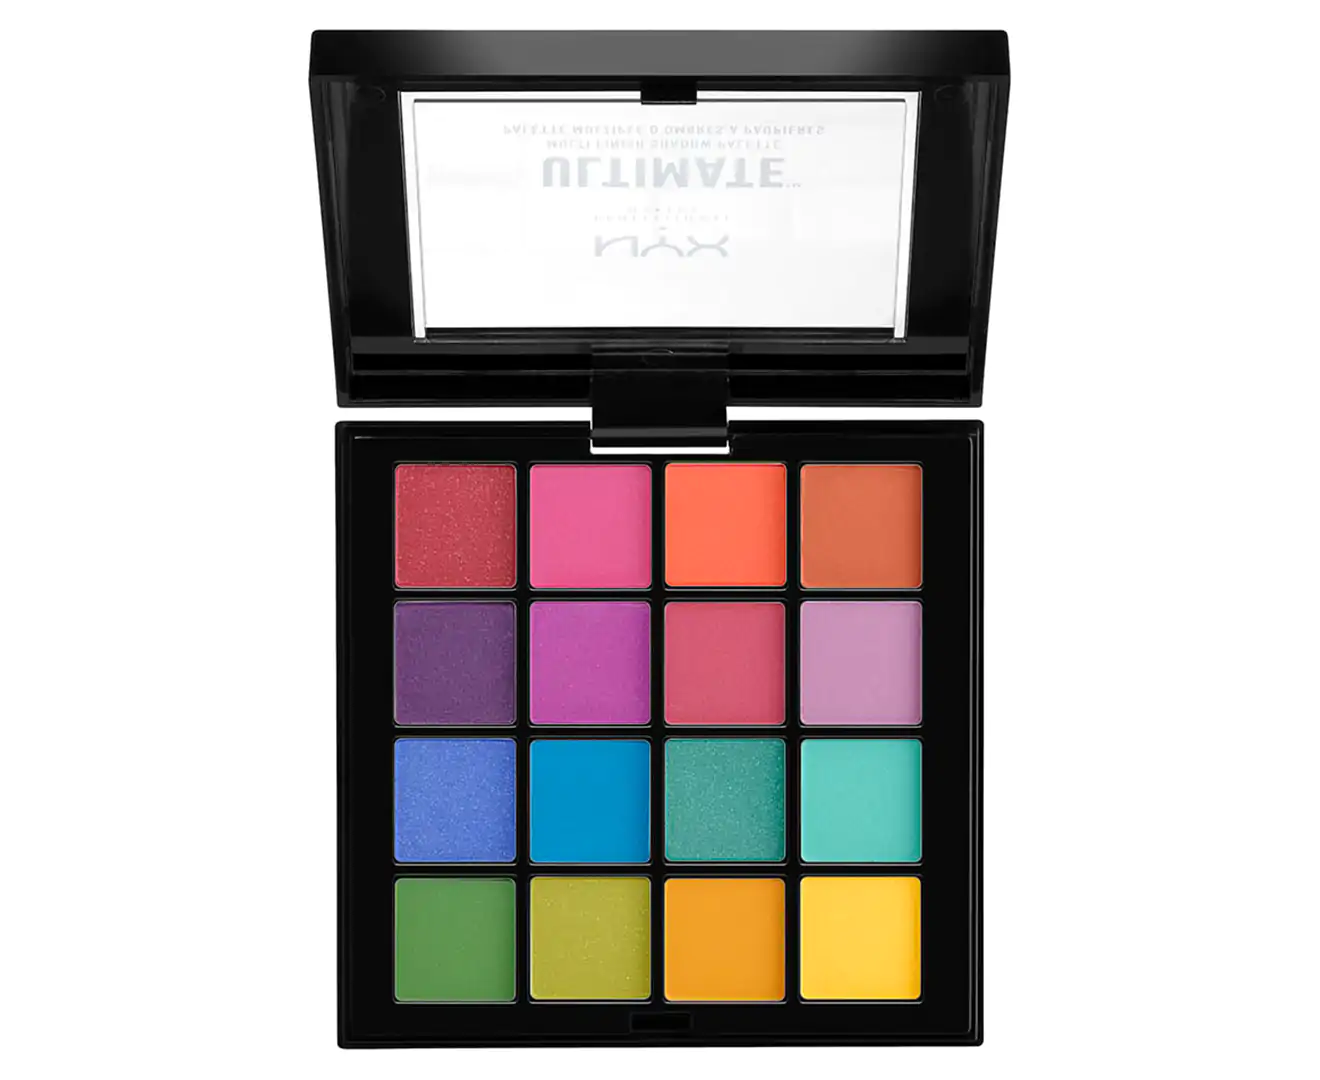 NYX Ultimate Eyeshadow Palette #USP04- Brights 16x 0.83g 0.02oz